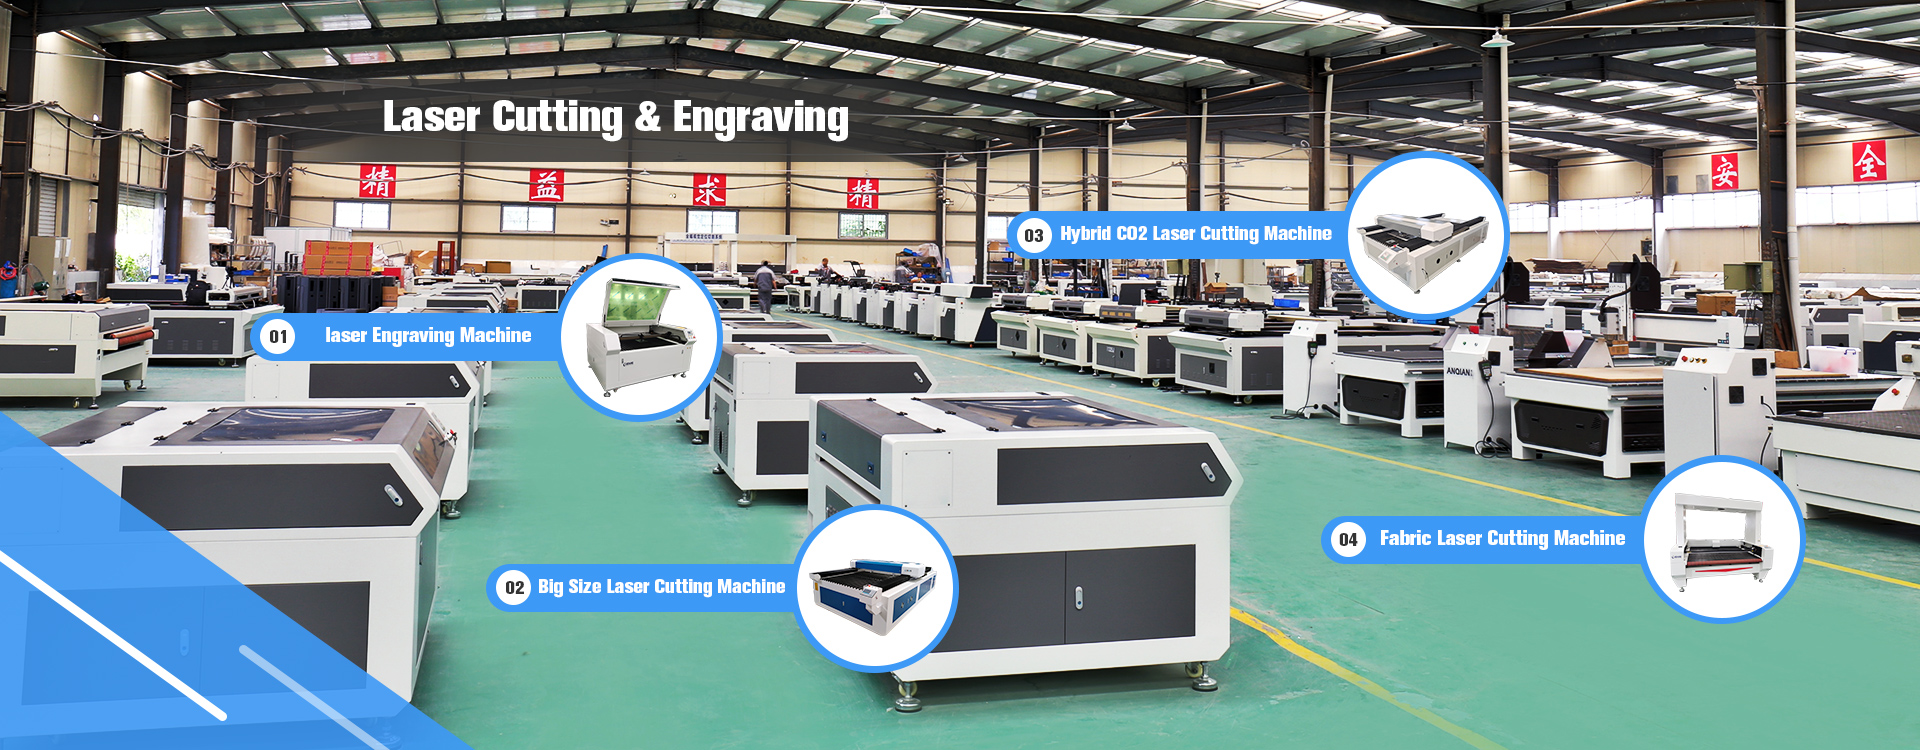 Jinan SIEME CNC Equipment Co., Ltd.